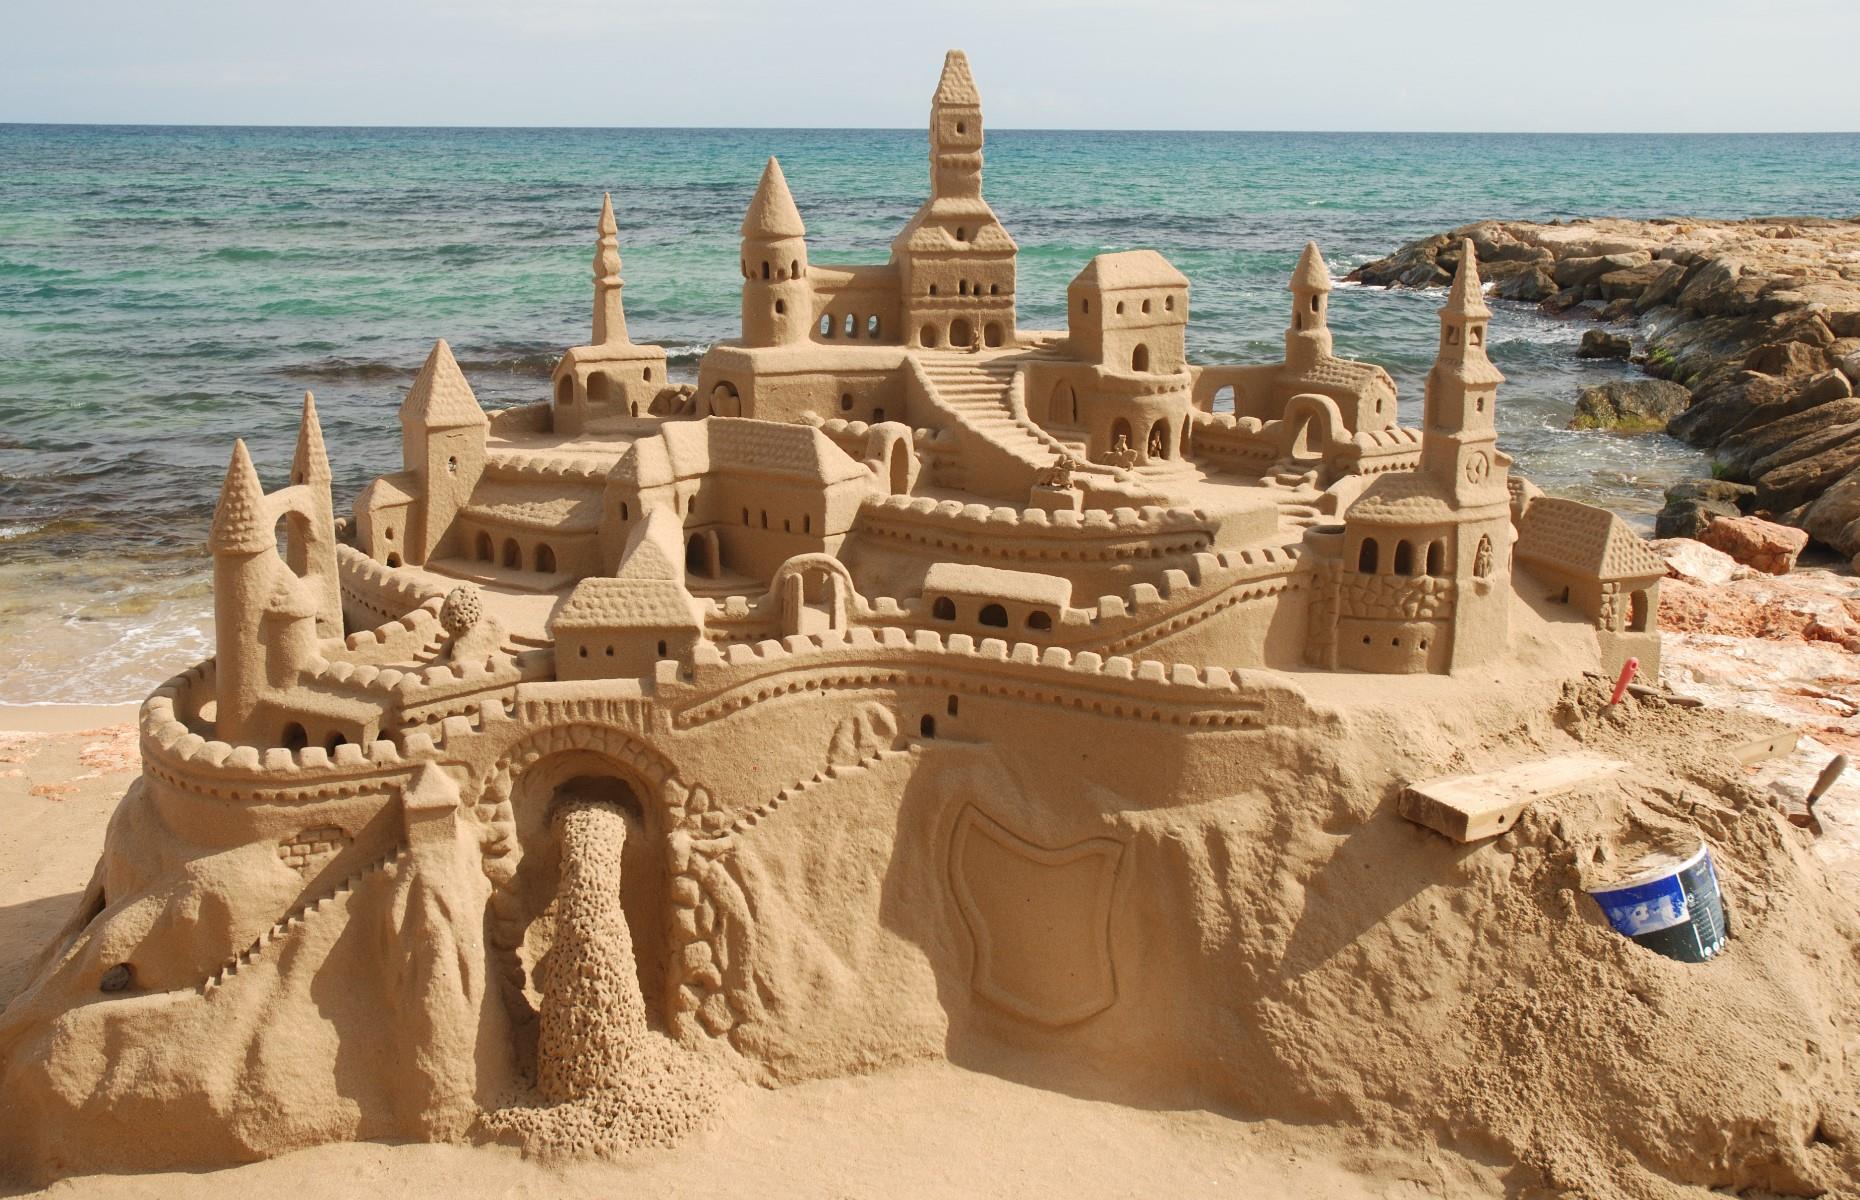 Italy: building sandcastles – $300 (£216) fine